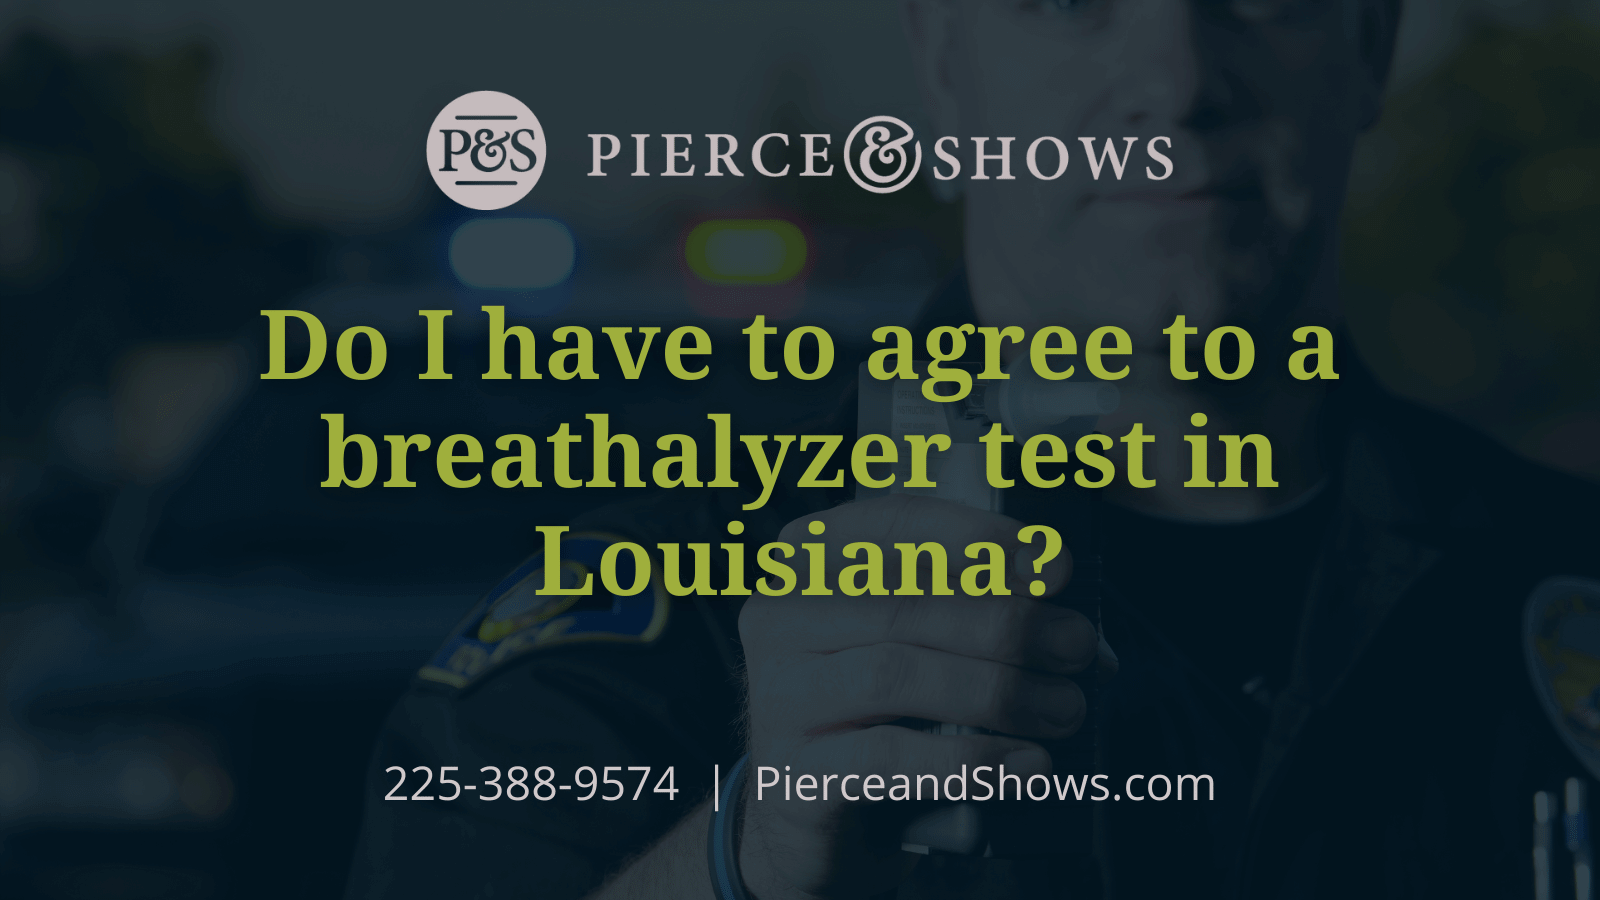 Do I have to agree to a breathalyzer test in Louisiana - Baton Rouge Louisiana injury attorney Pierce & Shows